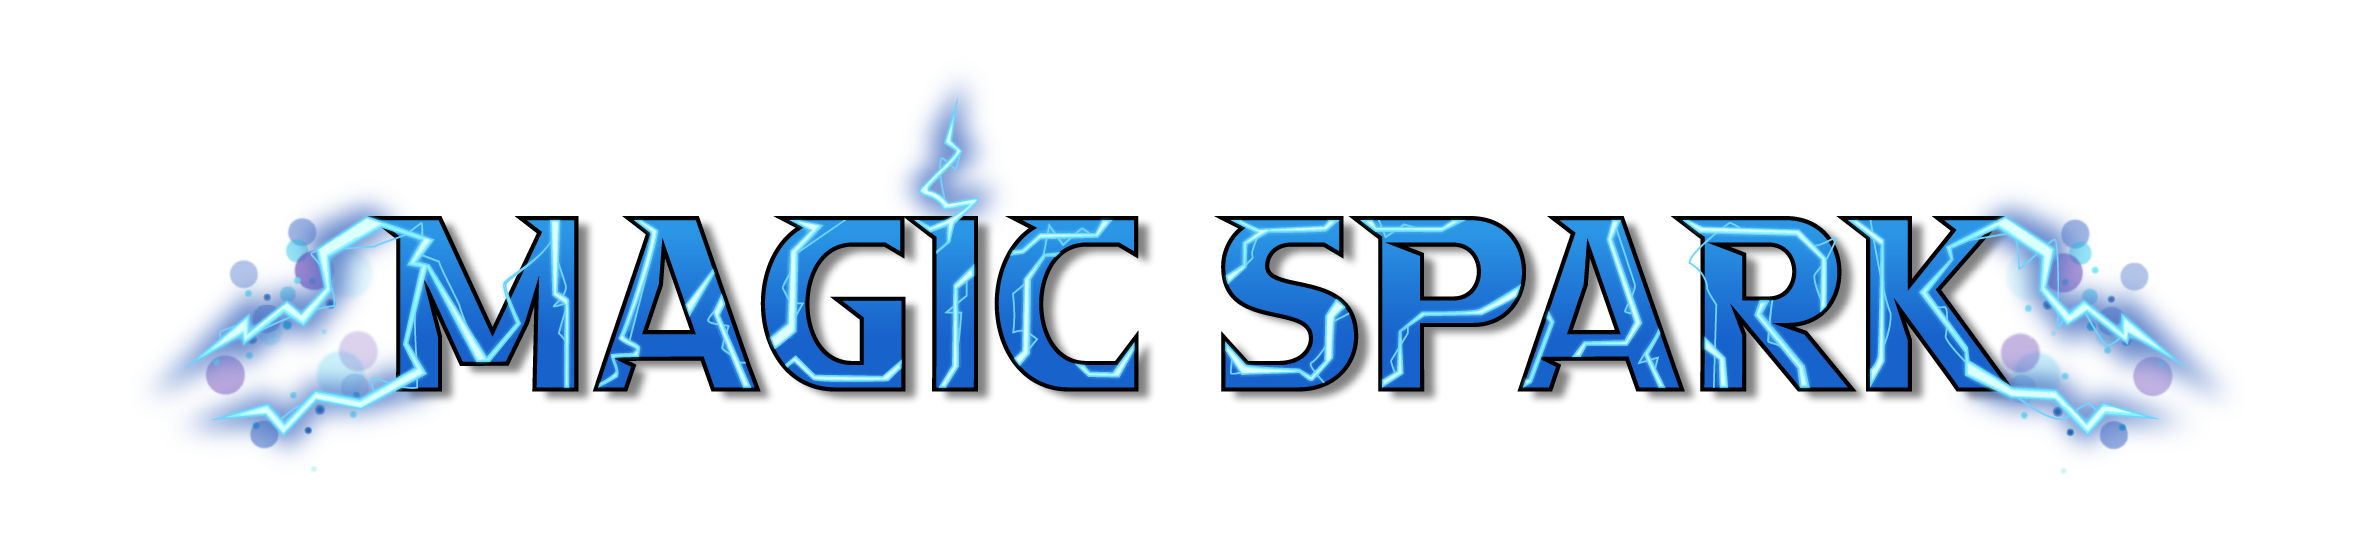 Logo Magic Spark